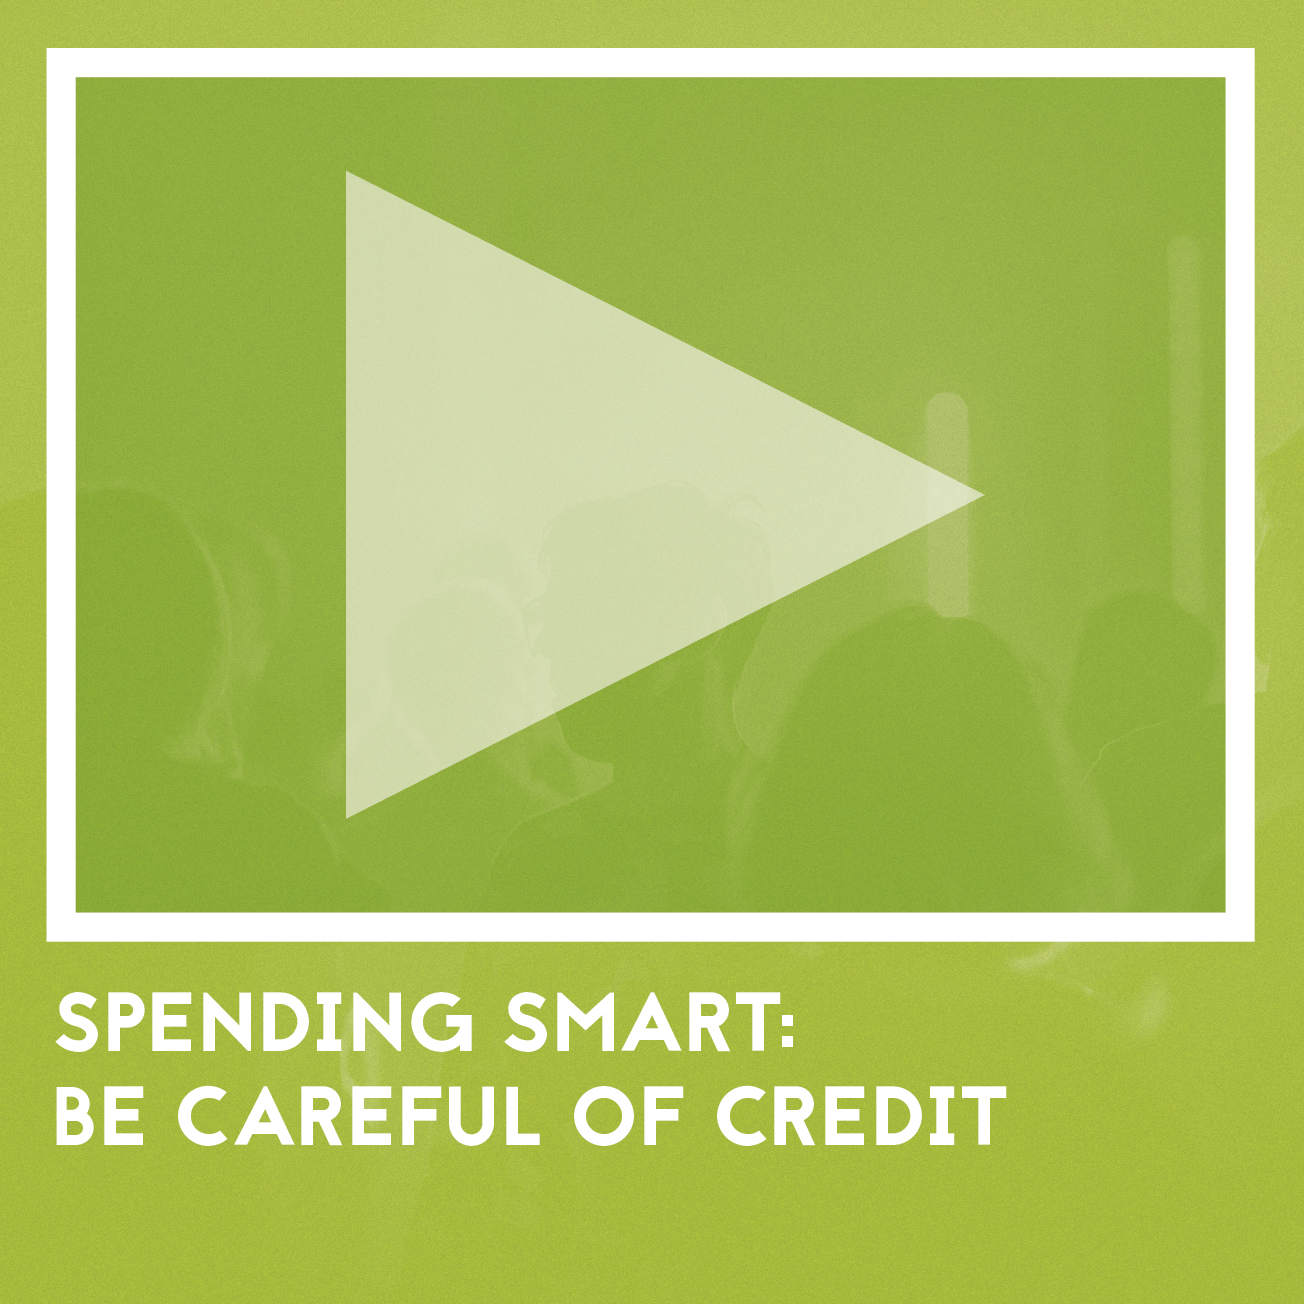 Spending Smart: be careful of credit